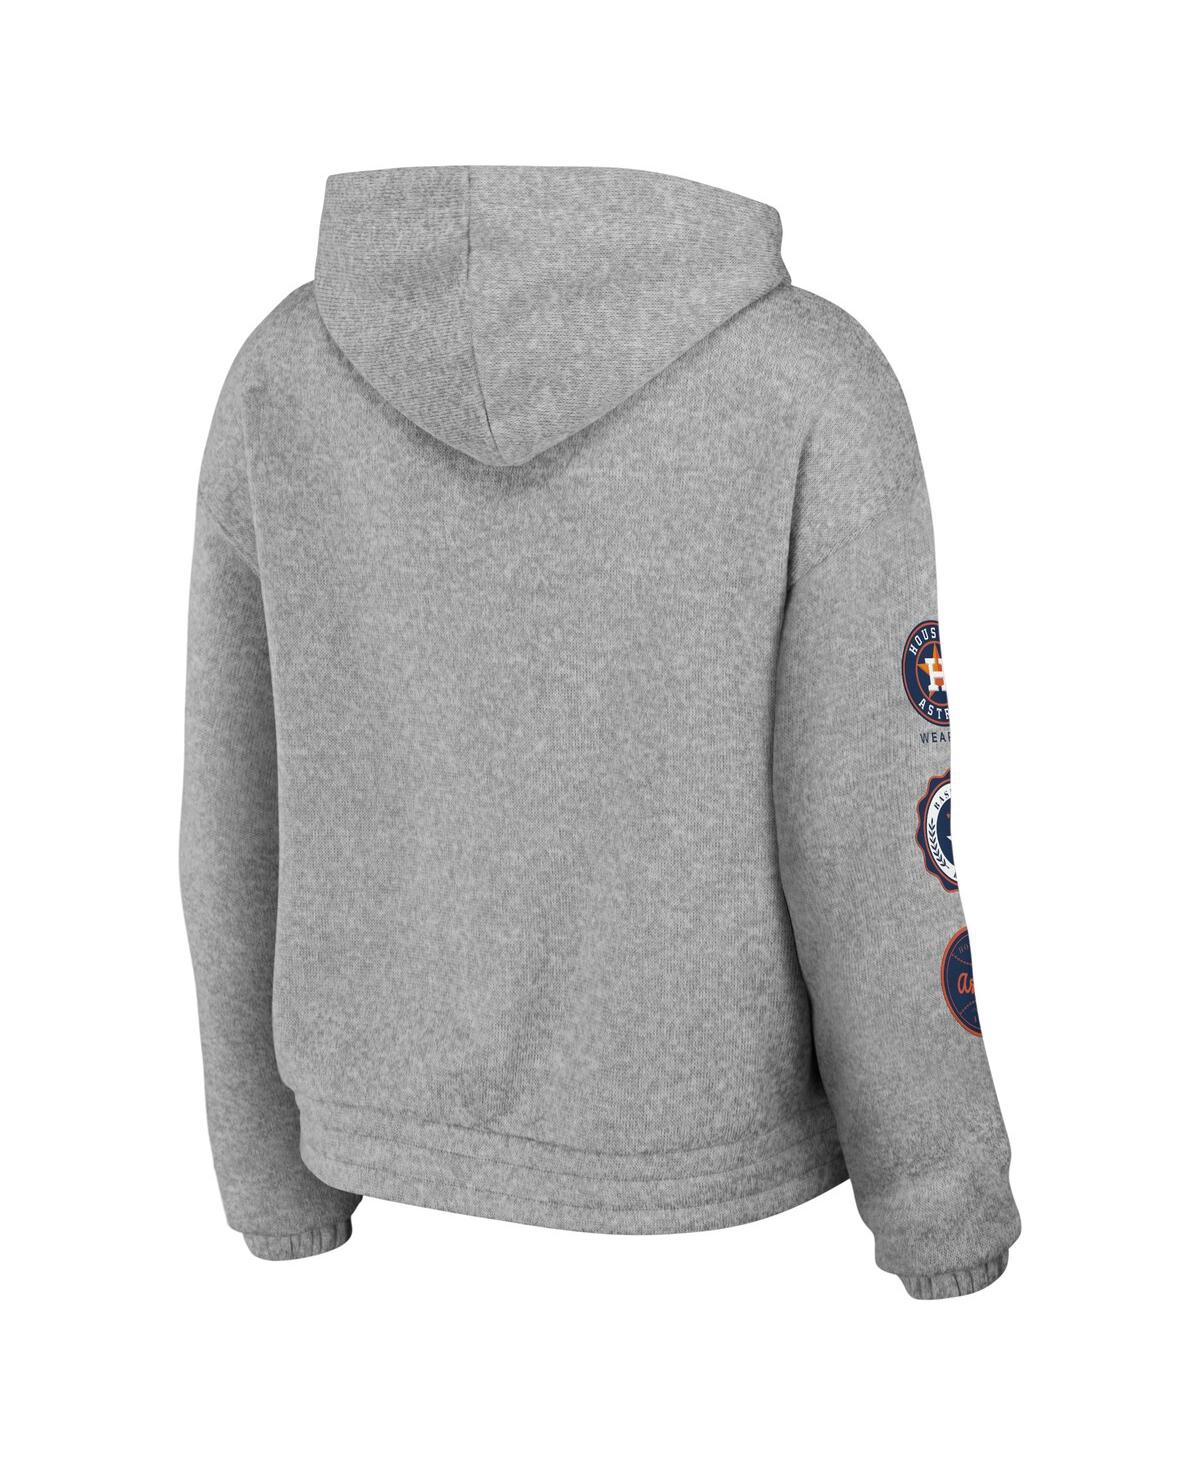 Shop Wear By Erin Andrews Women's  Gray Houston Astros Full-zip Hoodie